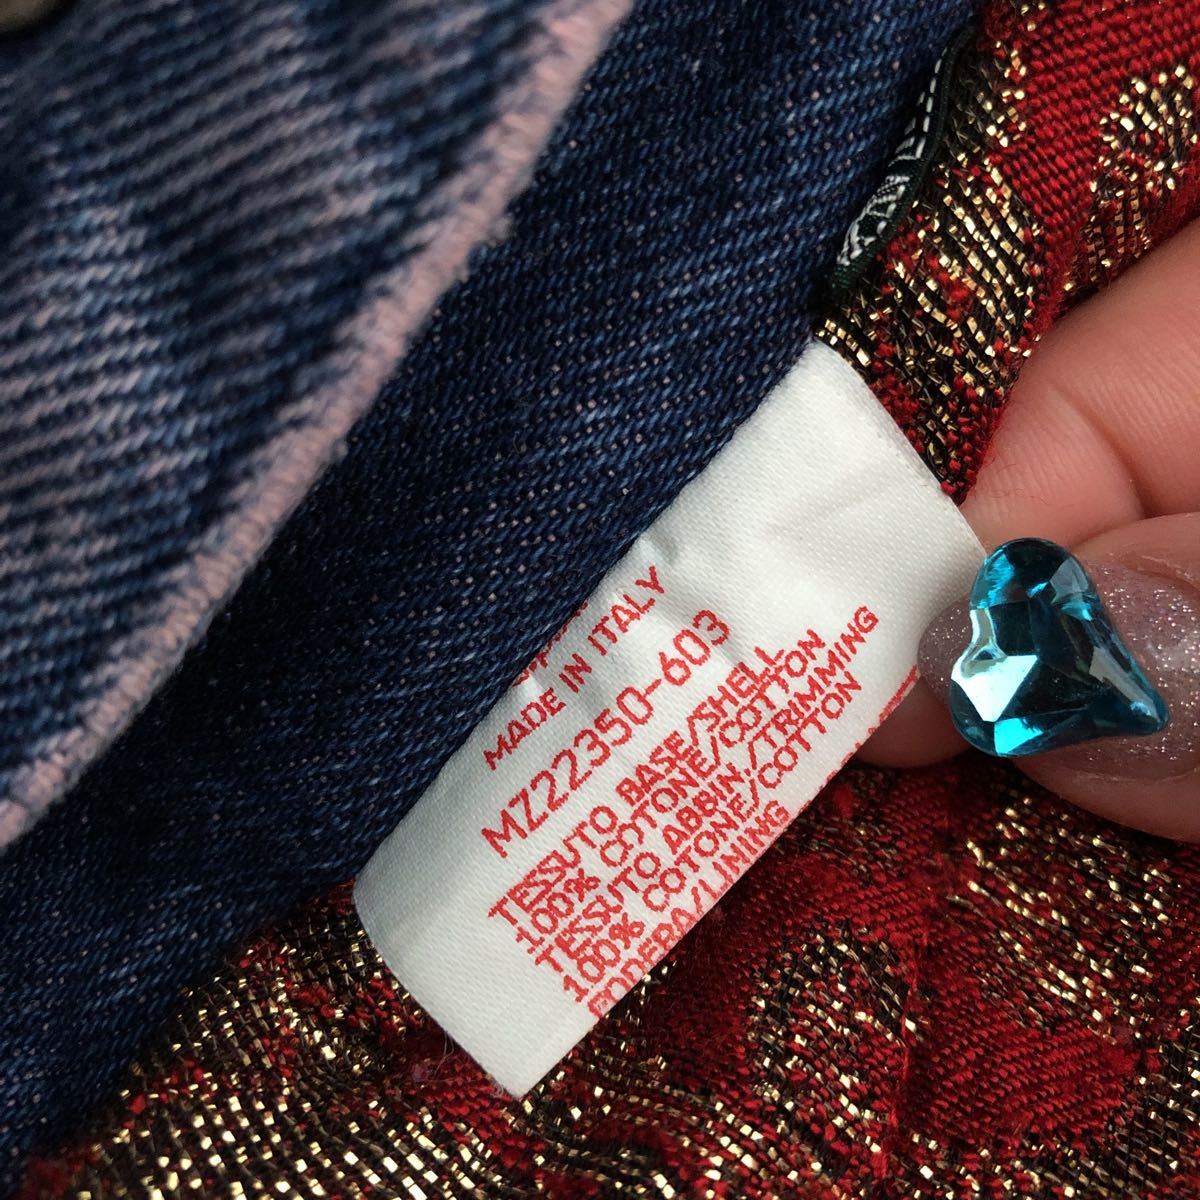 (k) GIANFRANCO FERRE JEANS ジャンブランコフェレ 中綿 イタリア製 金糸ドラゴン刺繍 ジャケット デニム_画像9